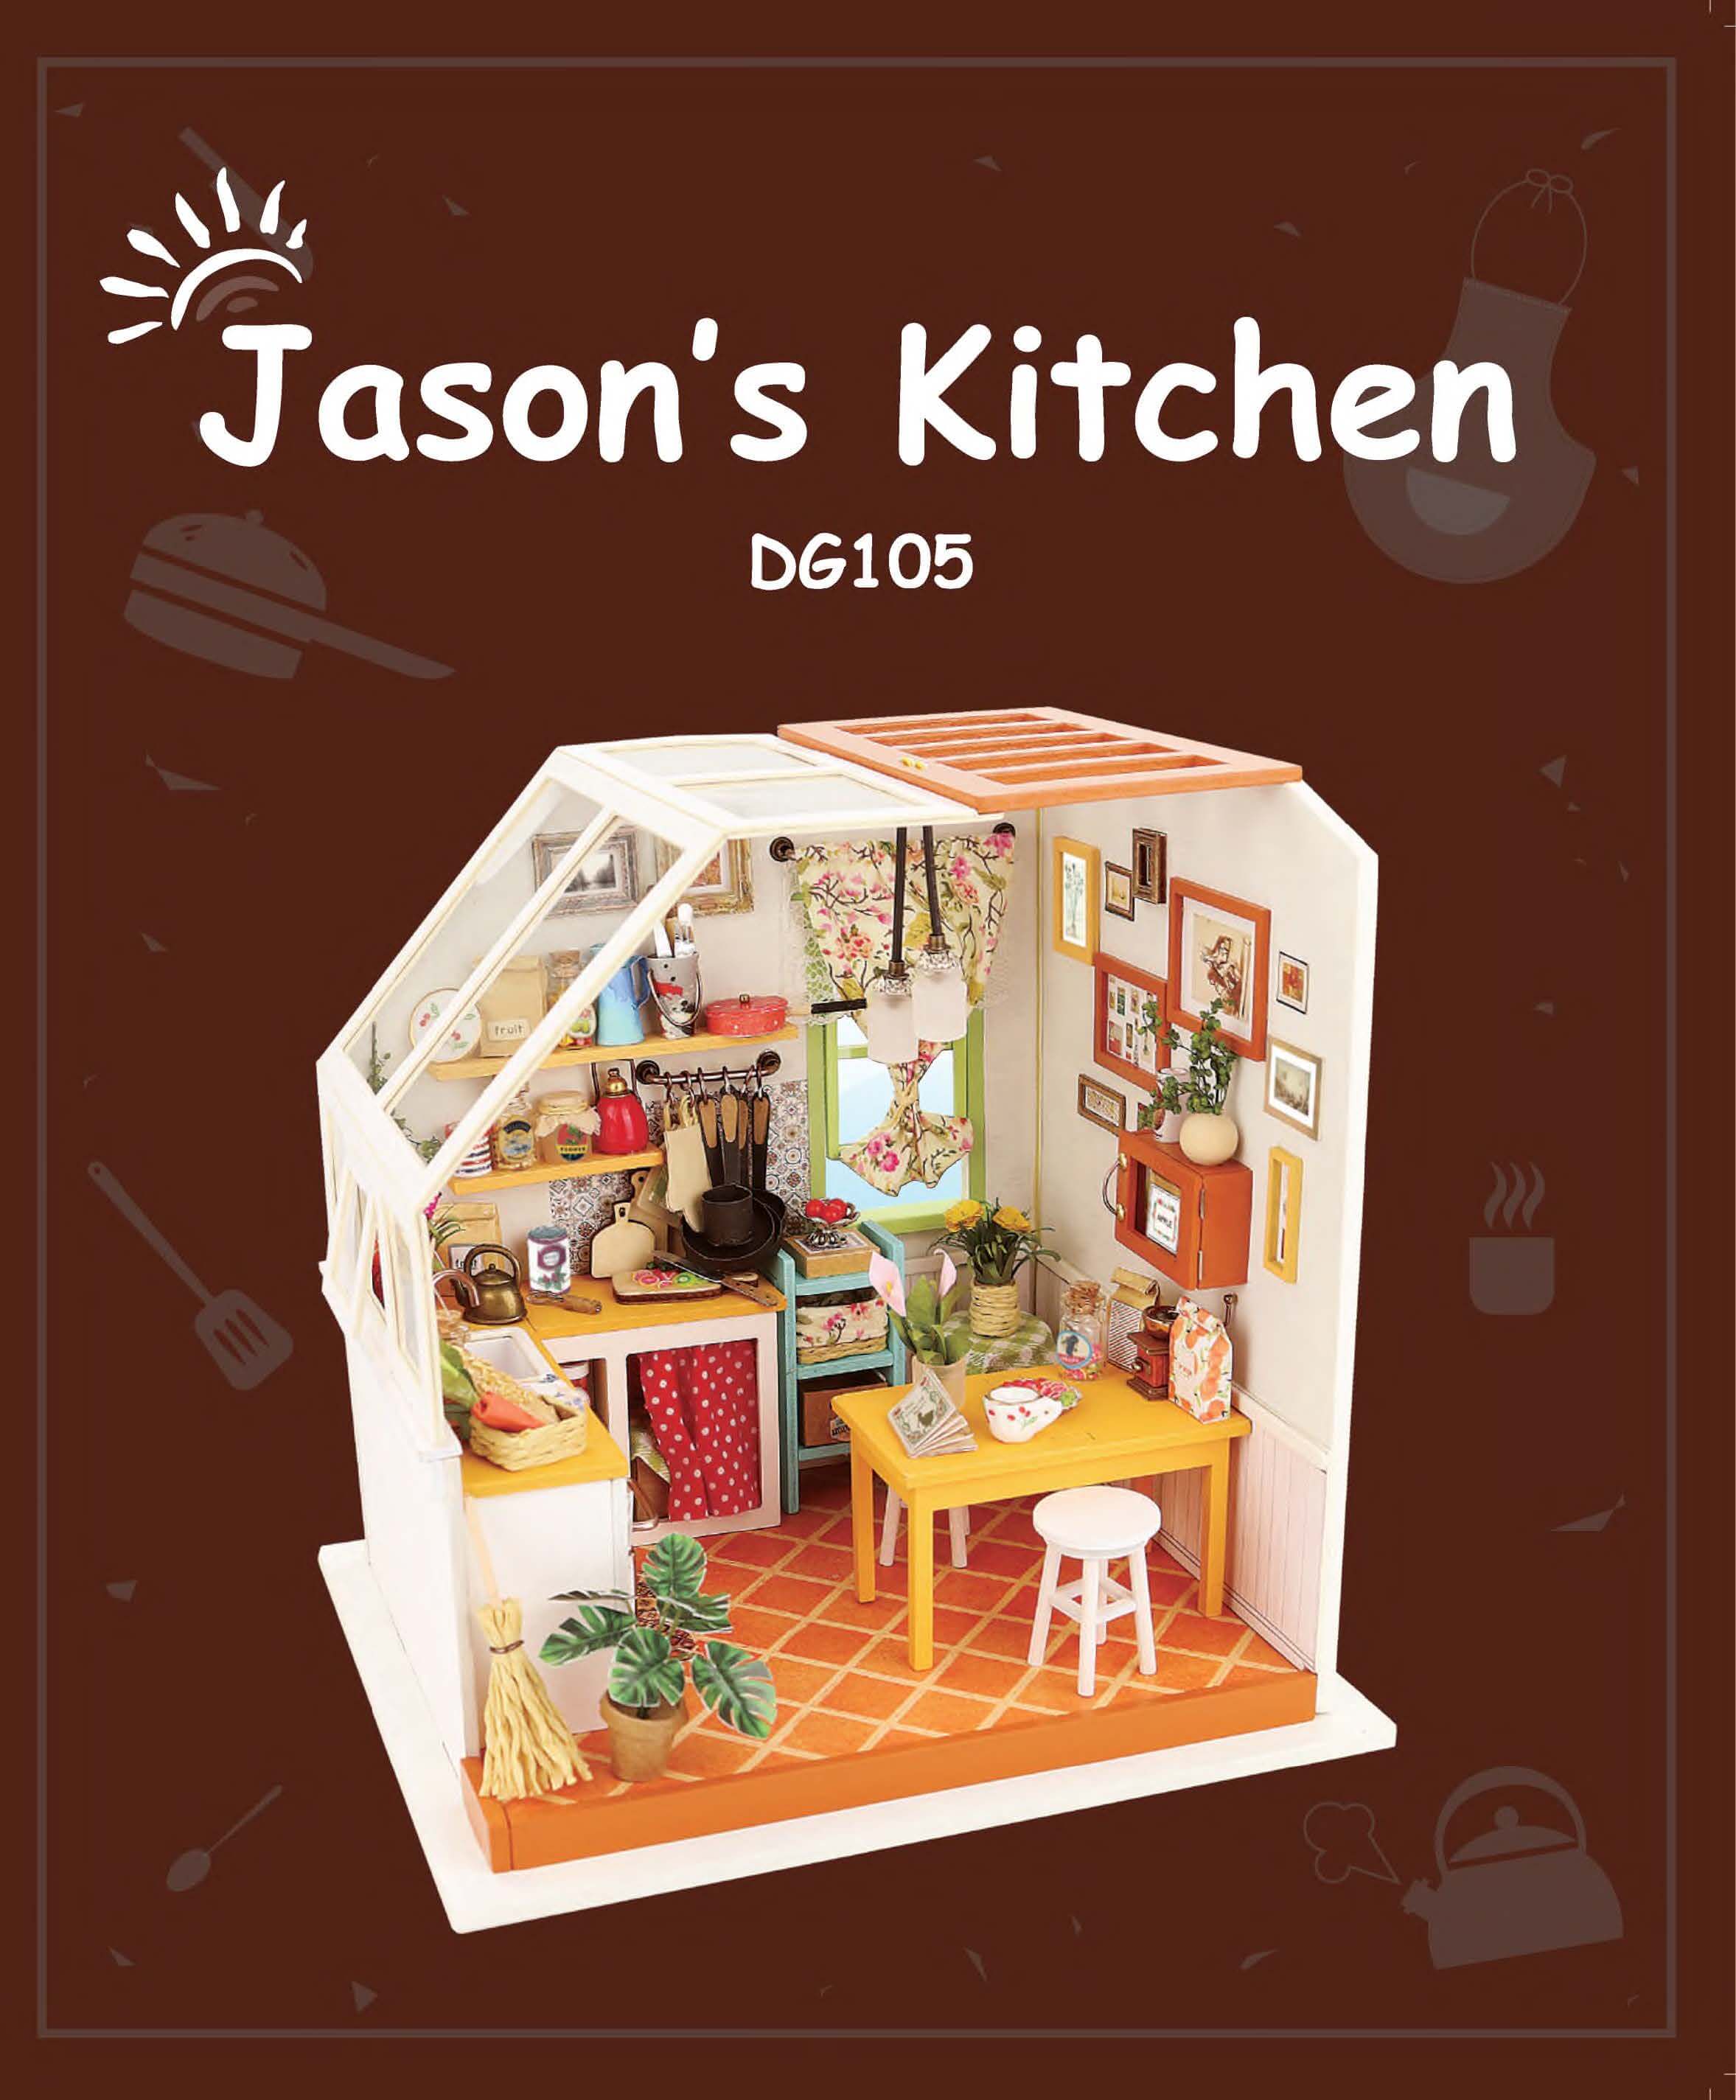 RDG105 - Jason's Kitchen Manual